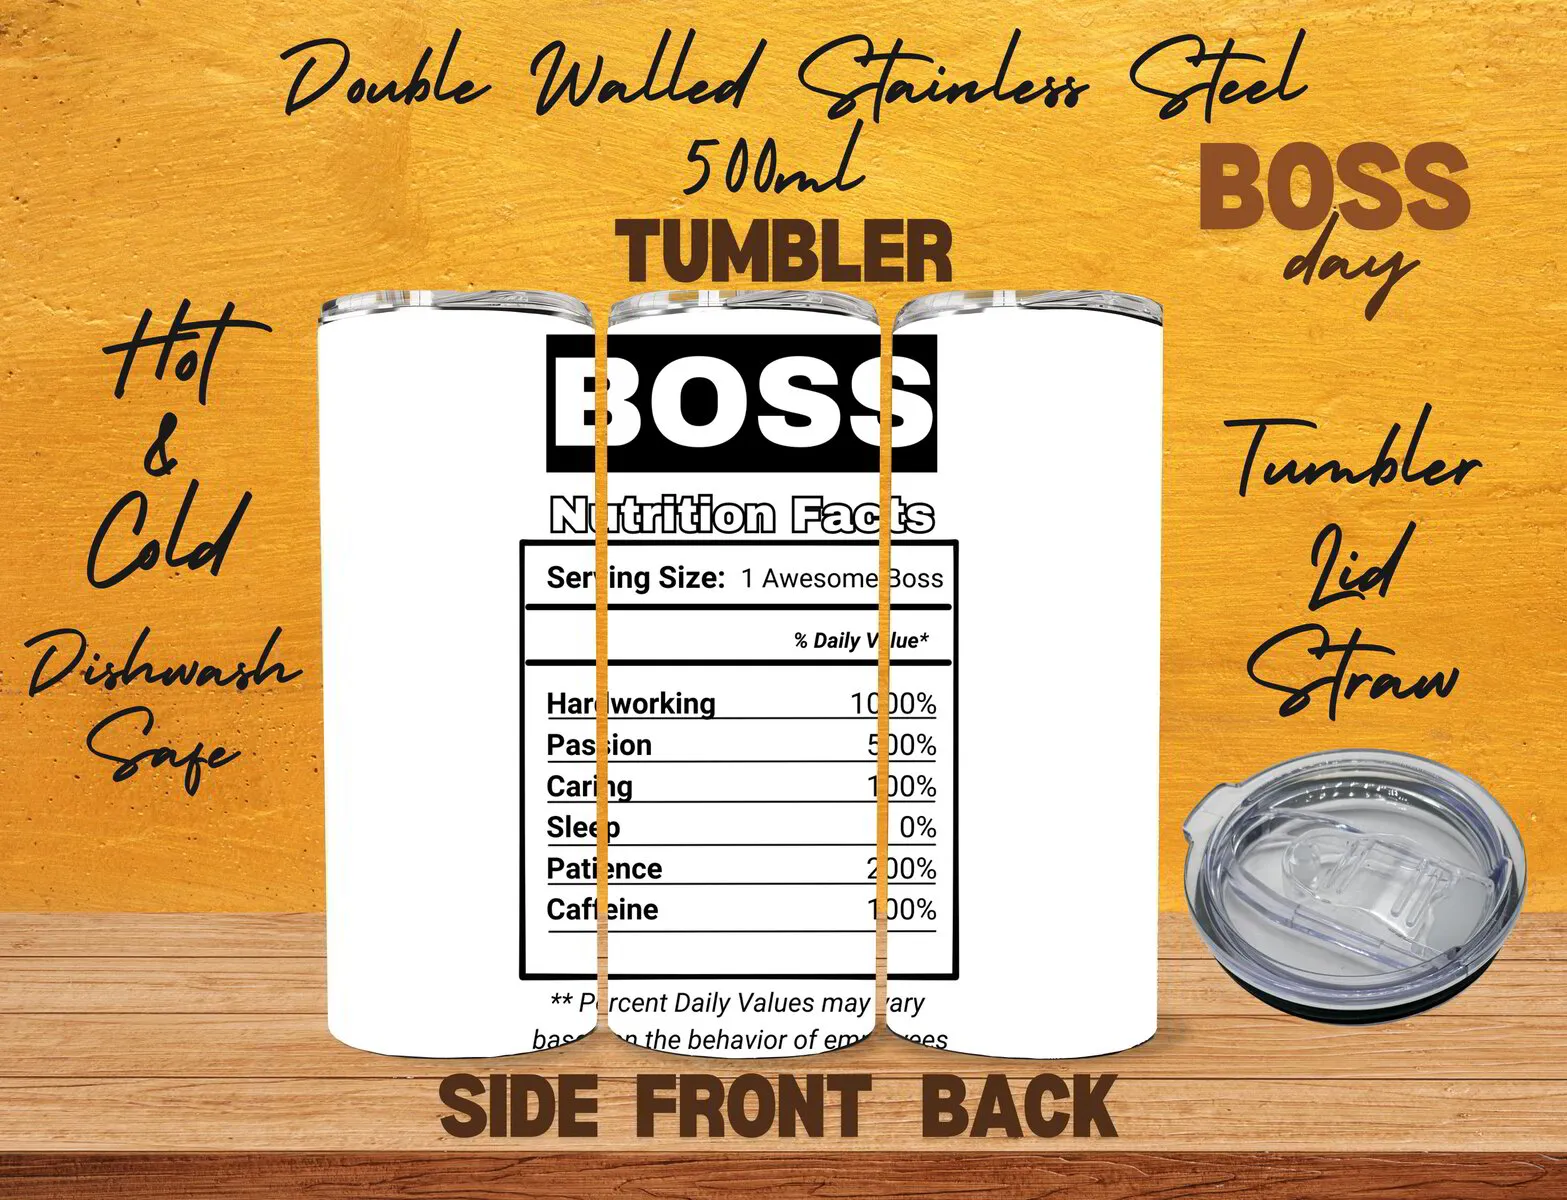 Boss's Day - 500ml Tumbler